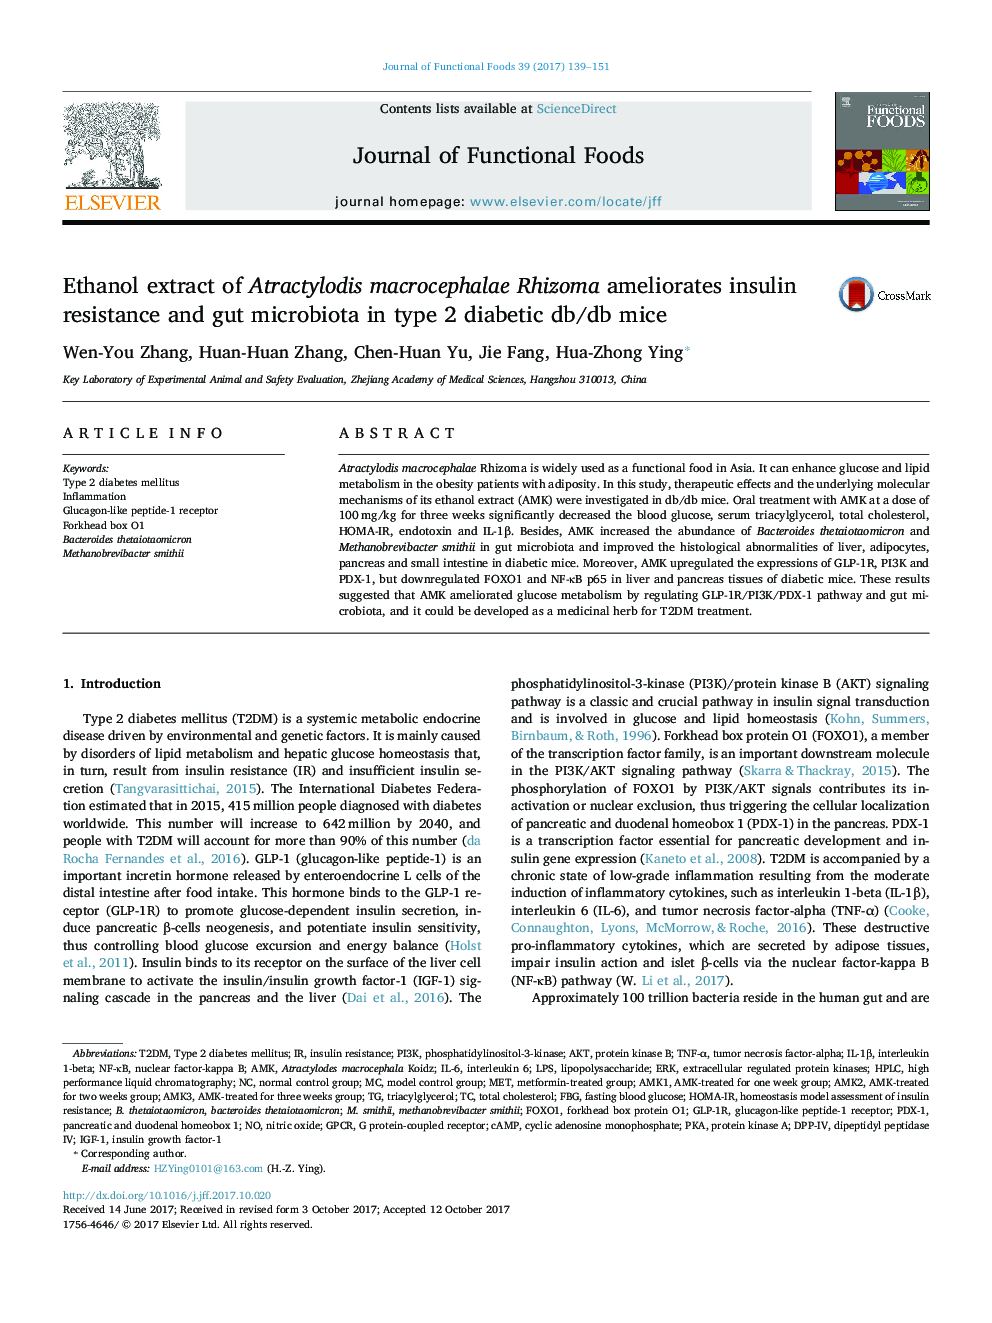 Ethanol extract of Atractylodis macrocephalae Rhizoma ameliorates insulin resistance and gut microbiota in type 2 diabetic db/db mice